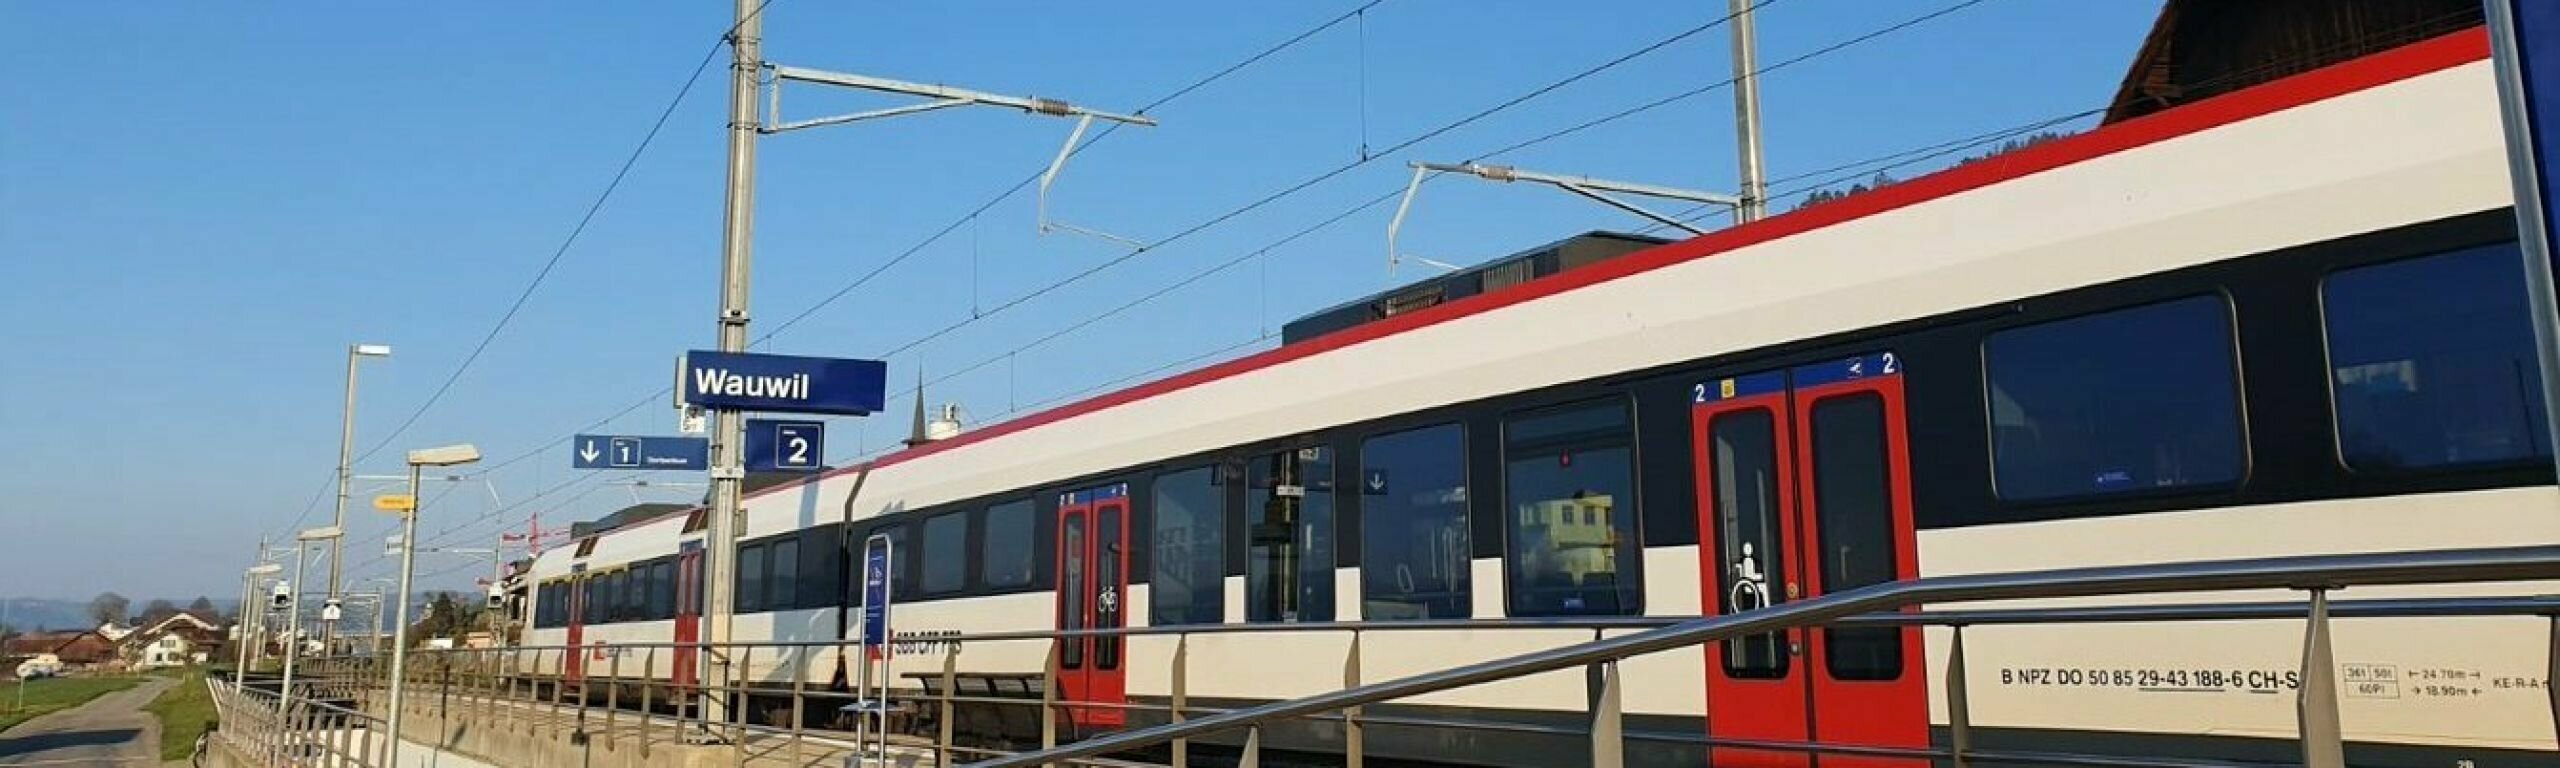 Bahnhof Wauwil